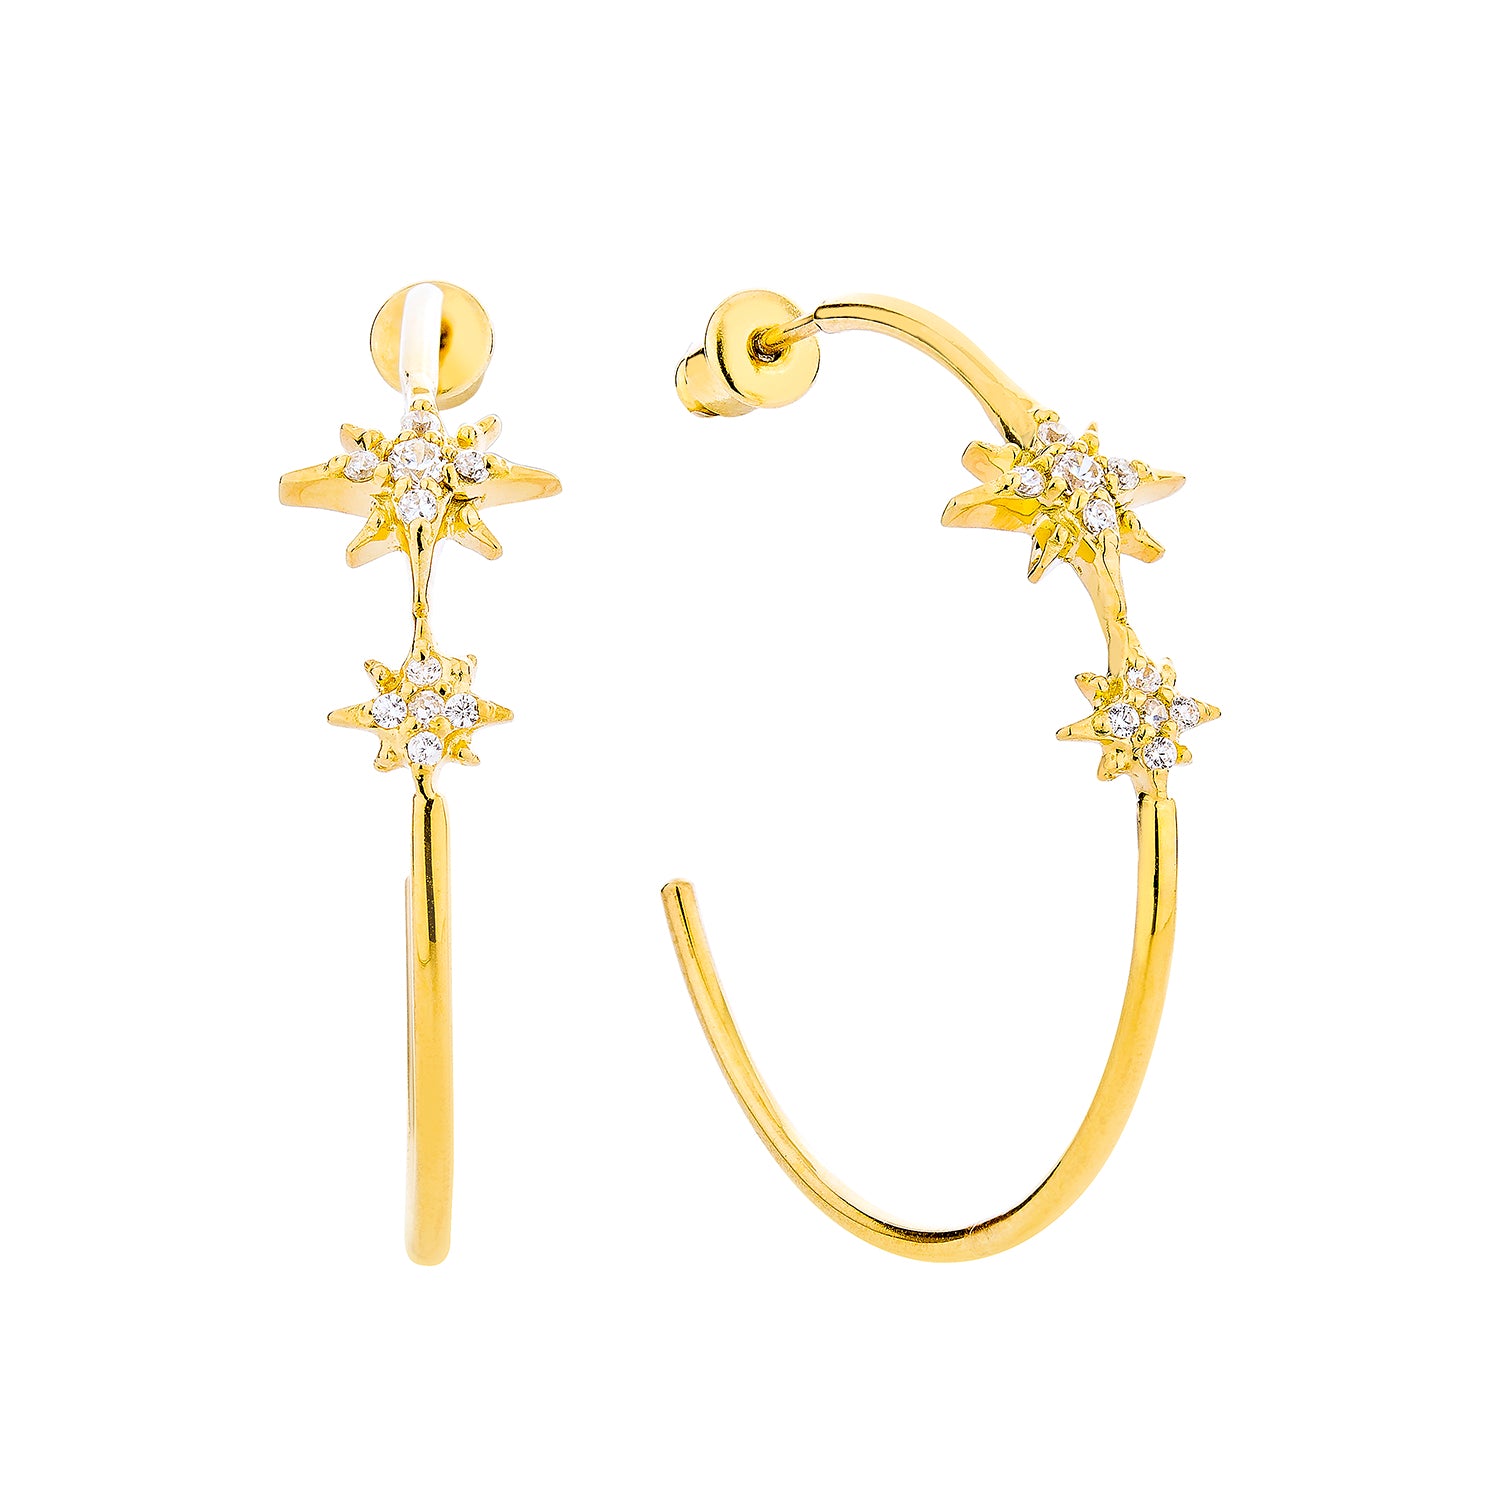 Celestial Hoop Earrings - Gold